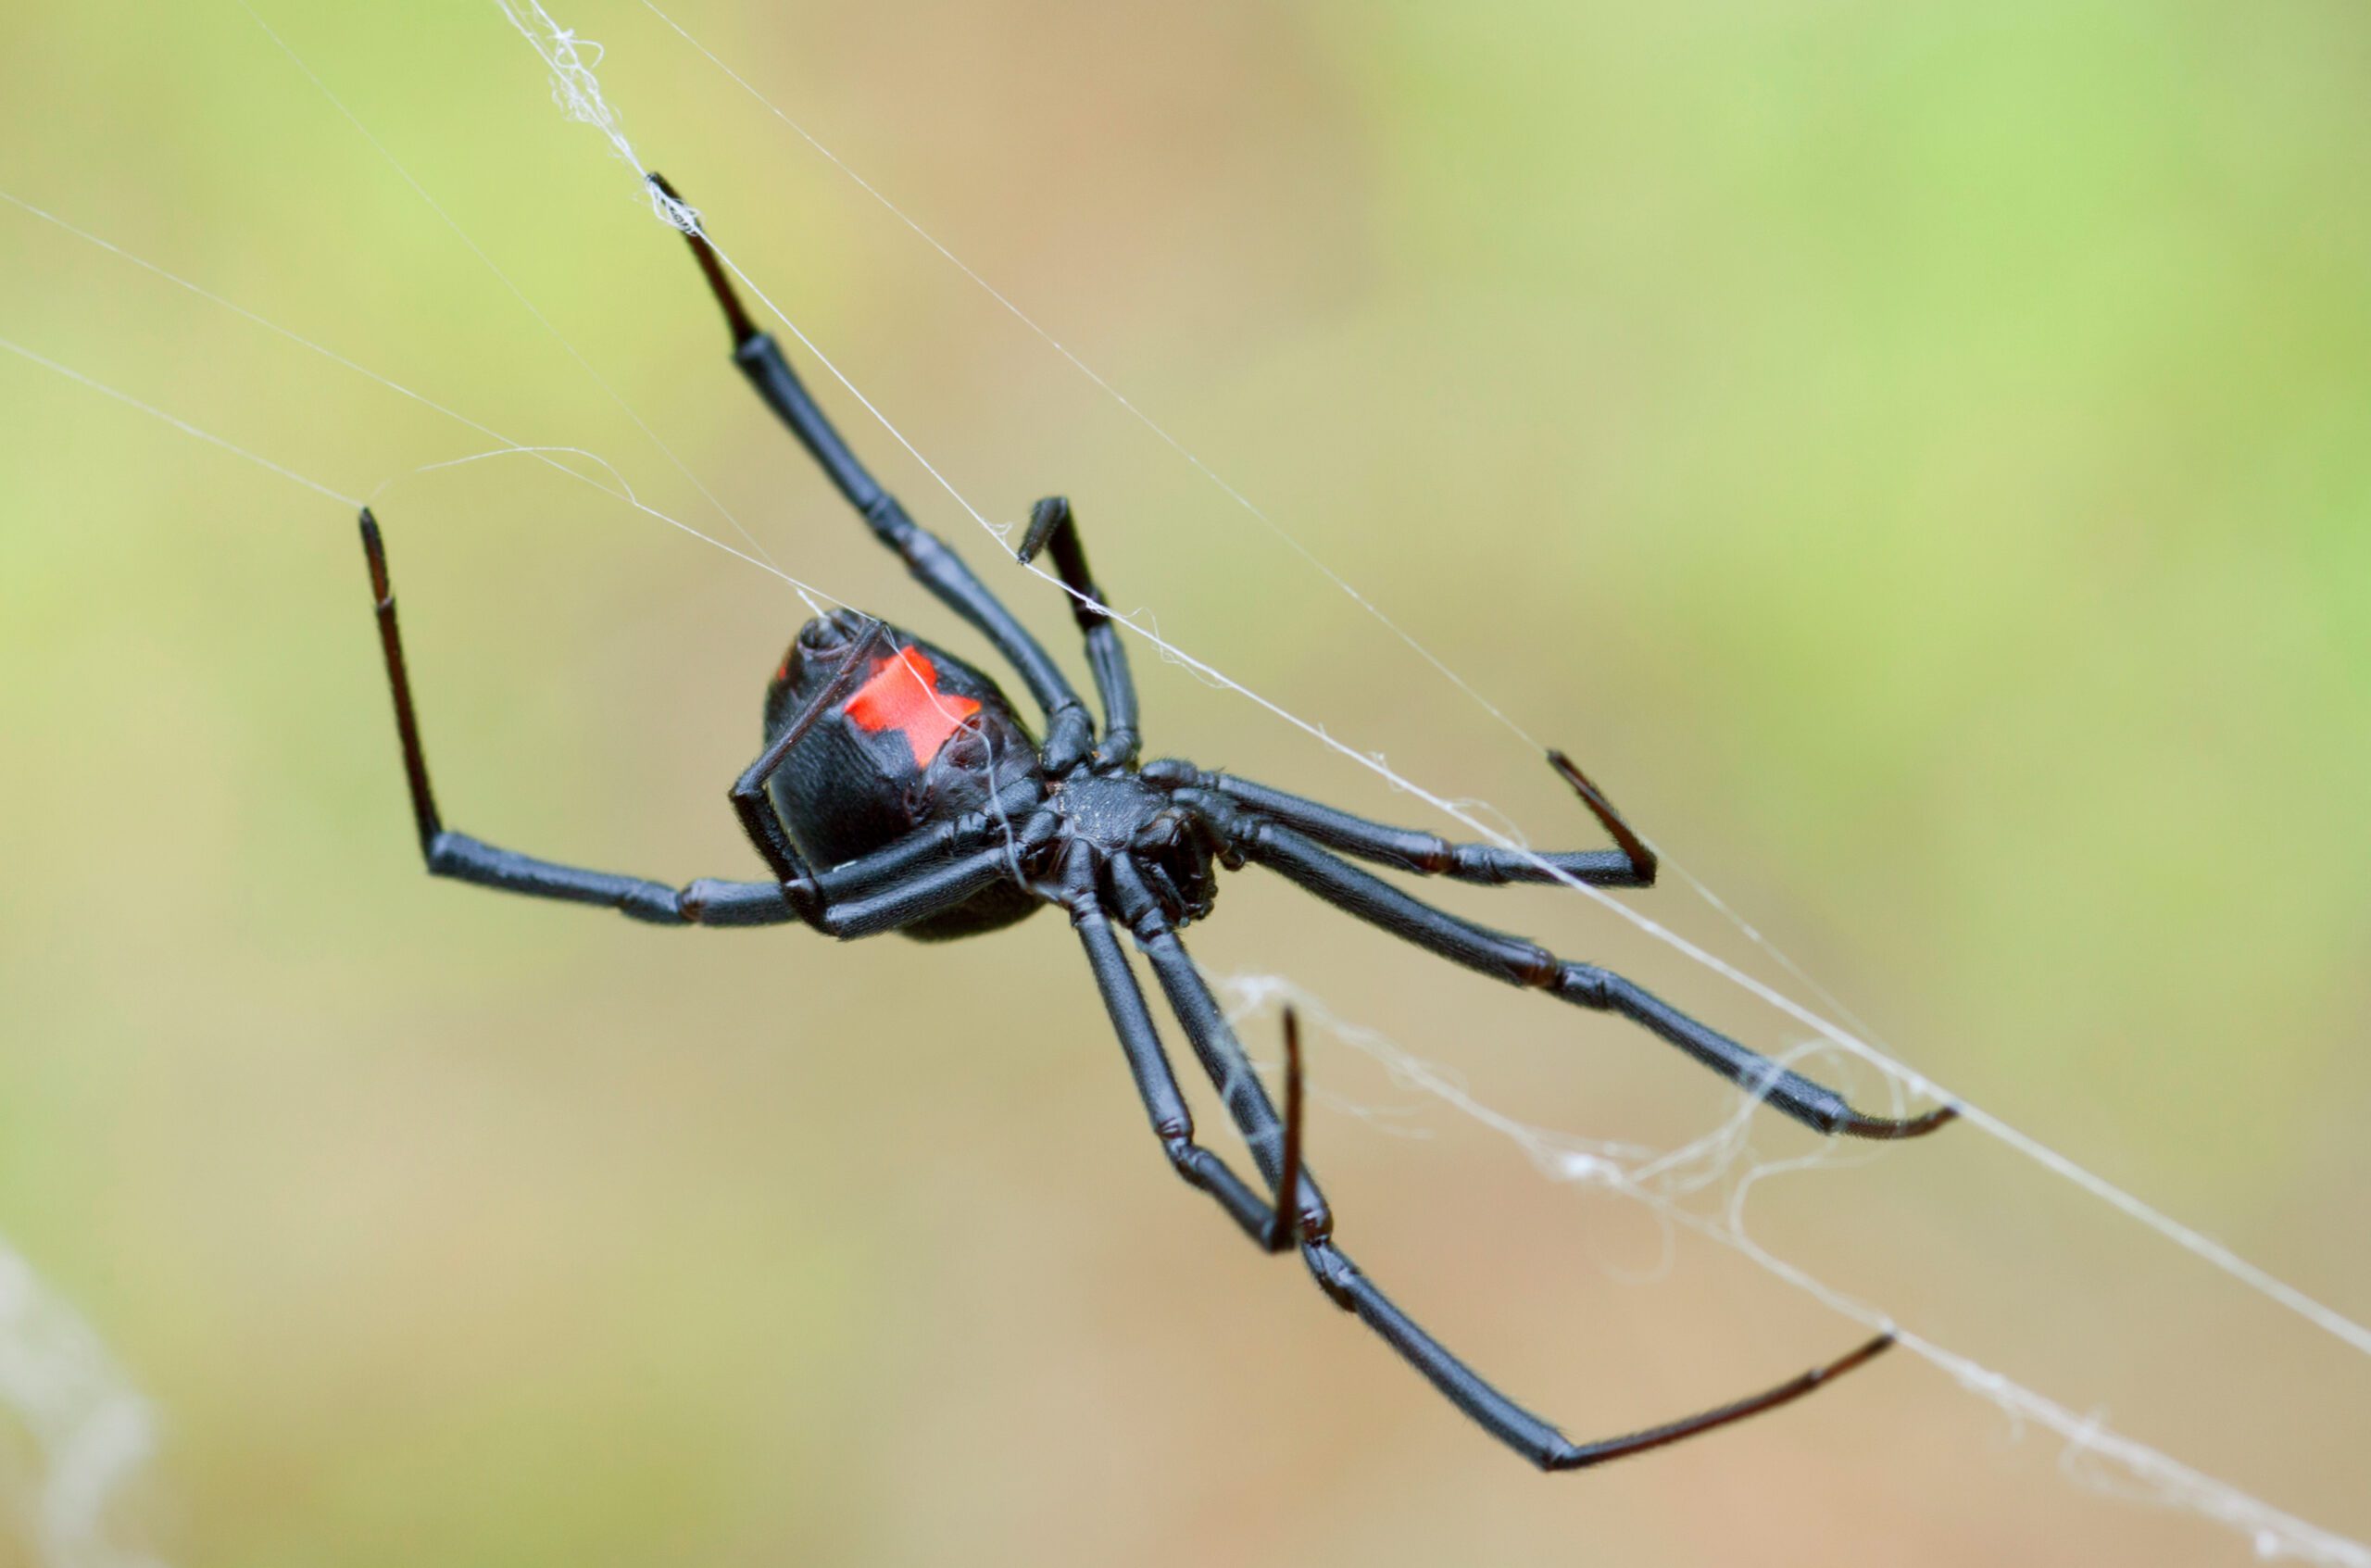 Spider Exterminator Black Widow Spiders Identification And Safety